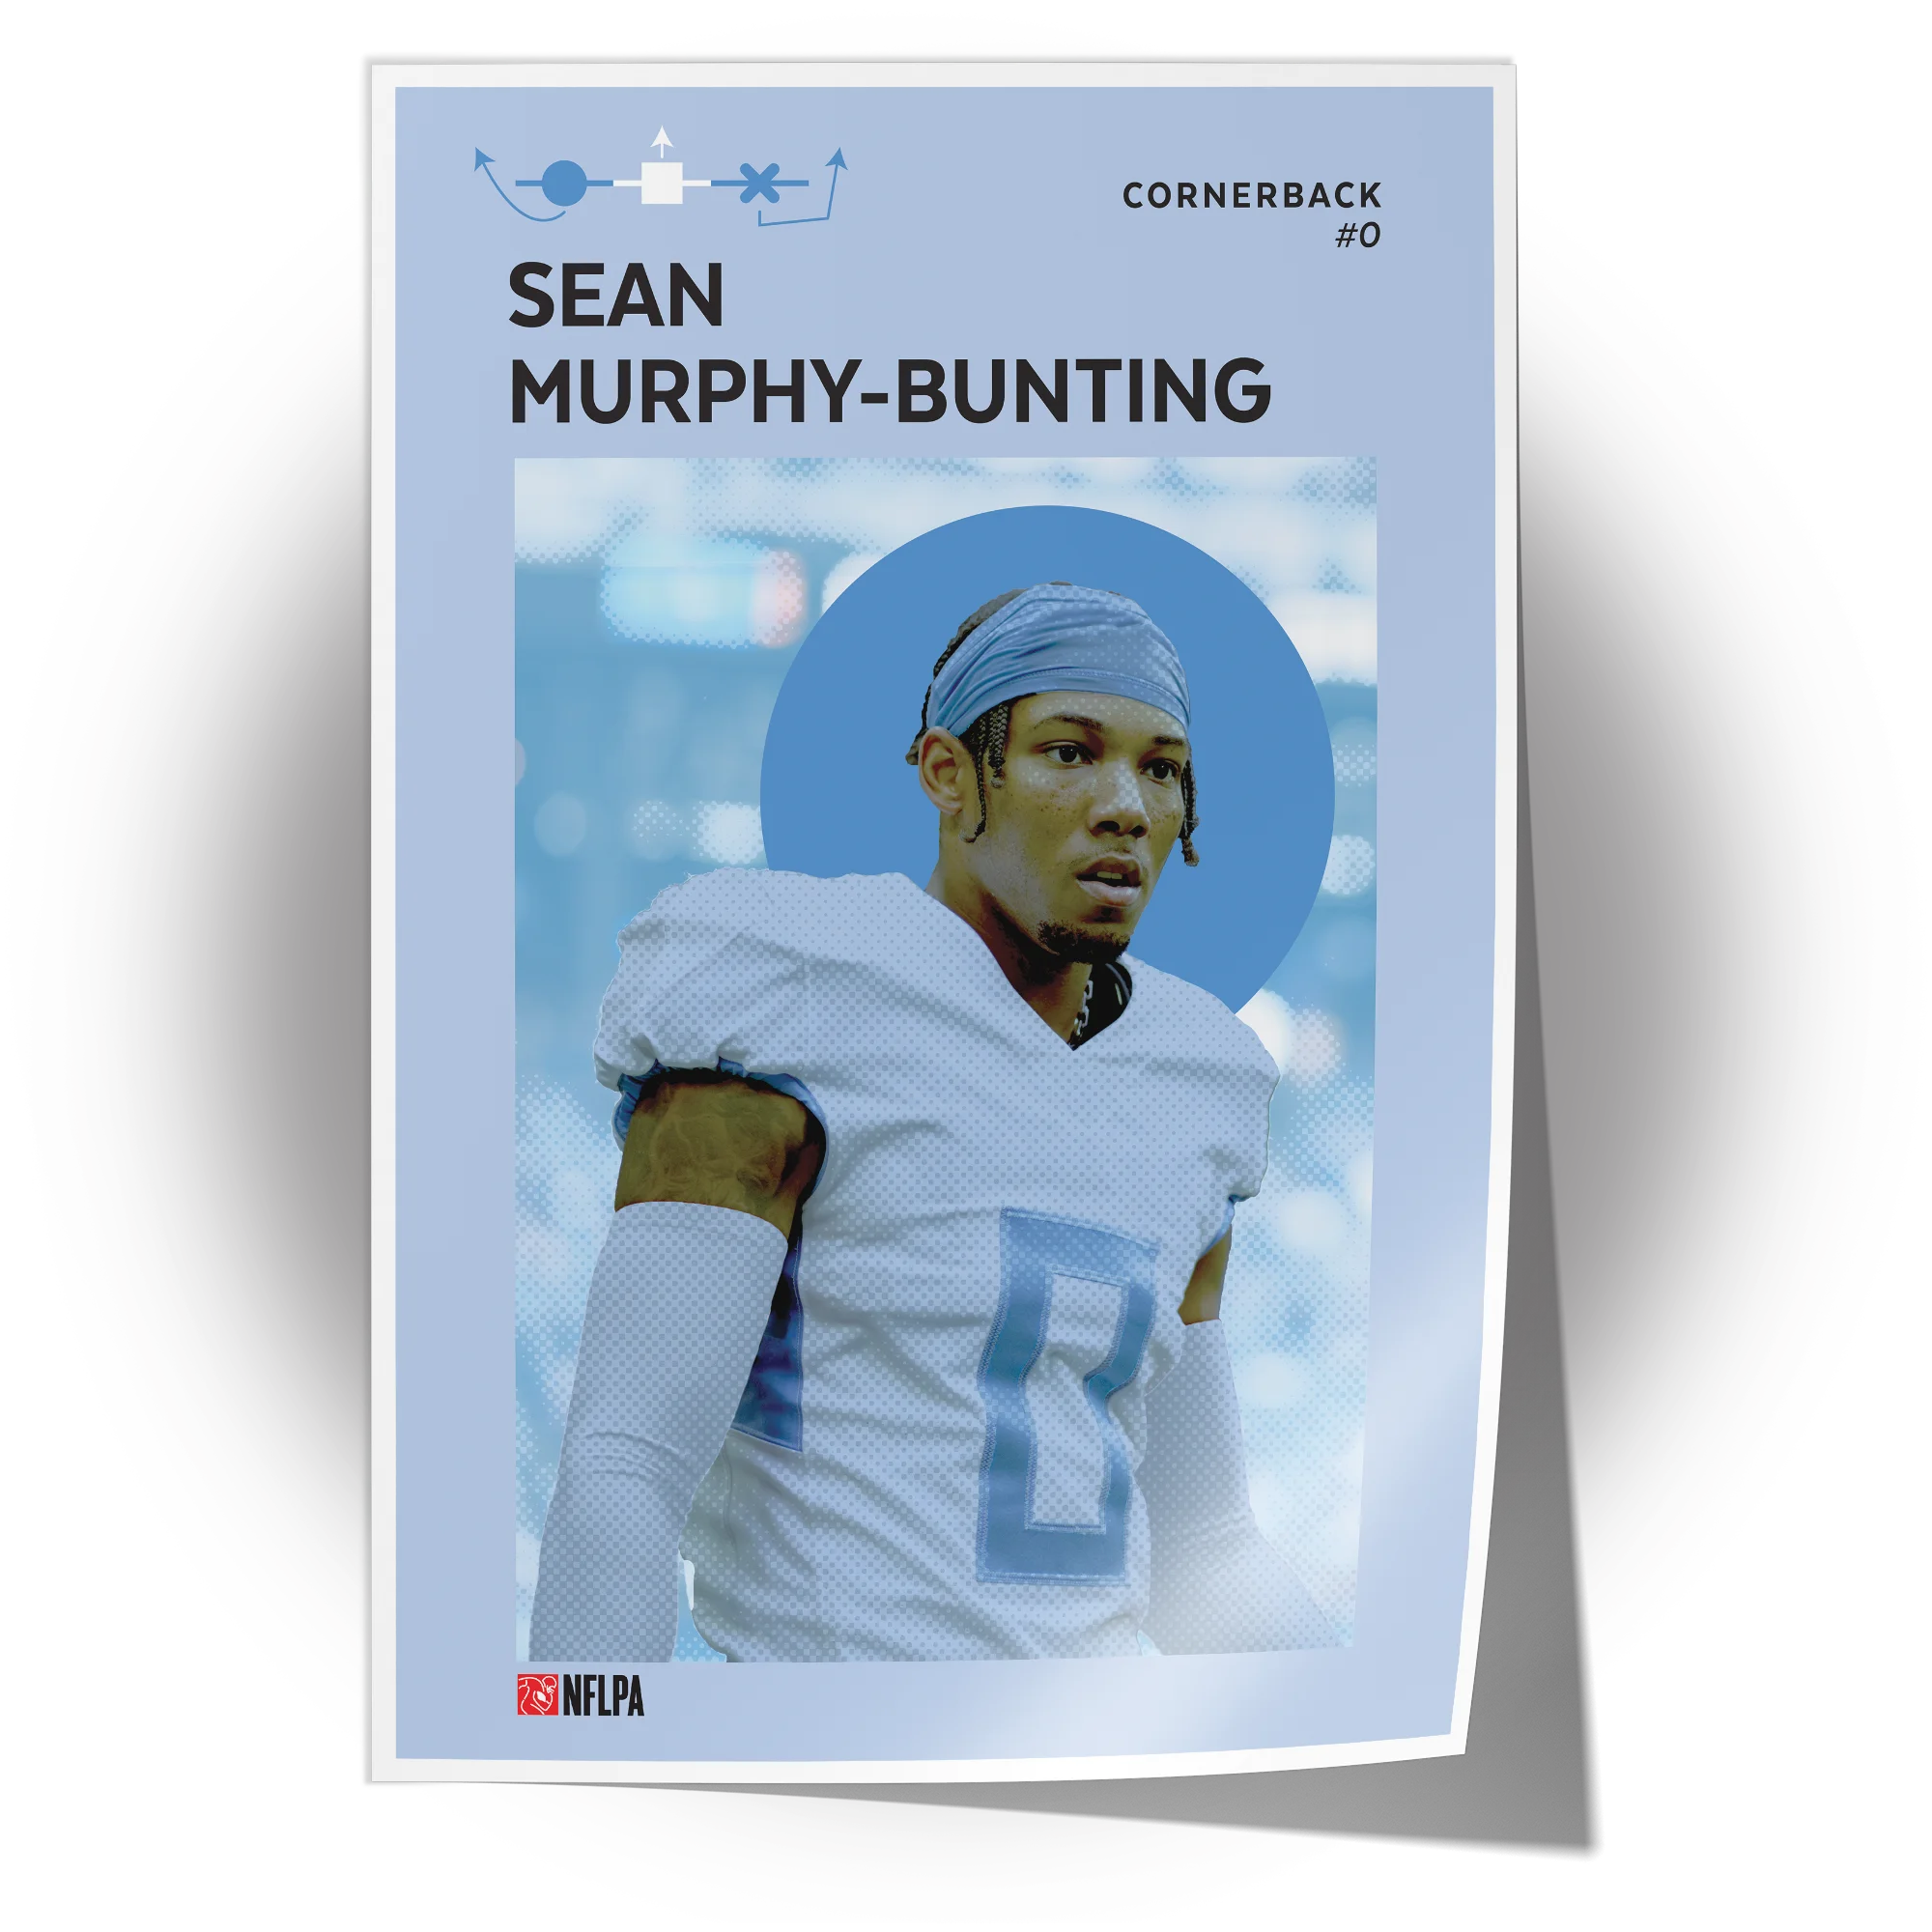 Sean Murphy-Bunting